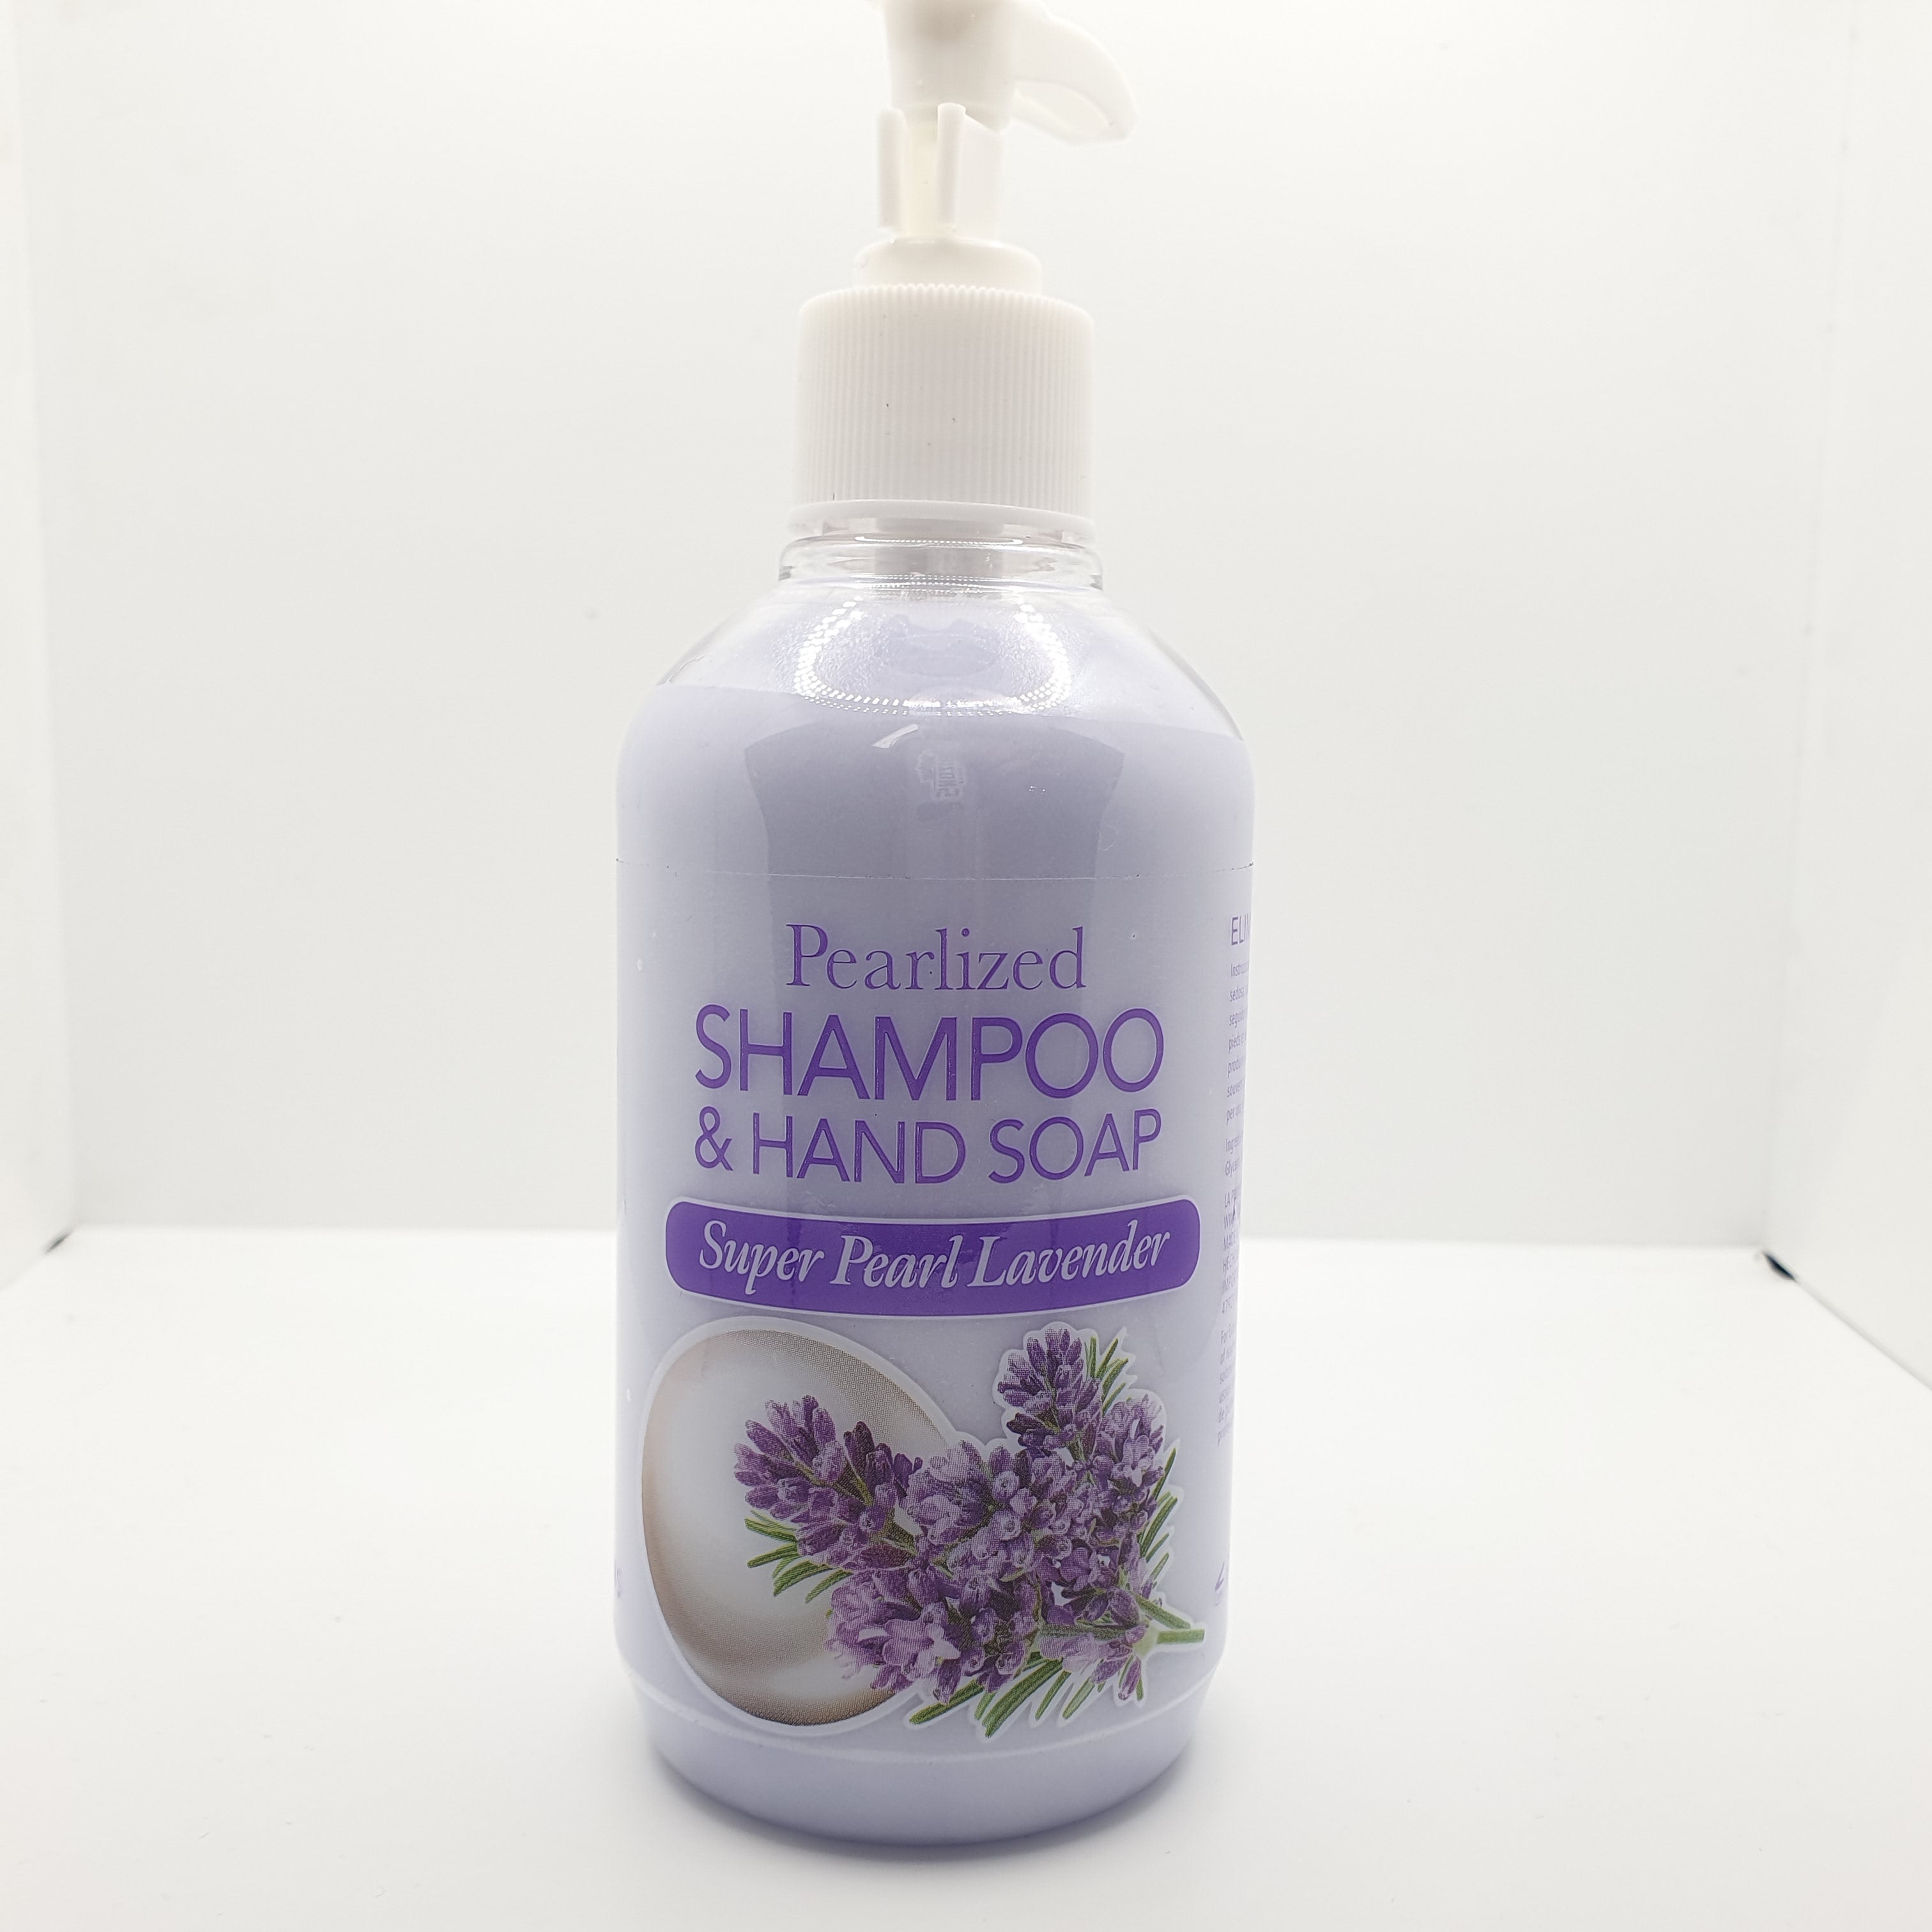 LAPALM SHAMPOO & HAND SOAP - SUPER PEARL LAVENDER - 8 OZ